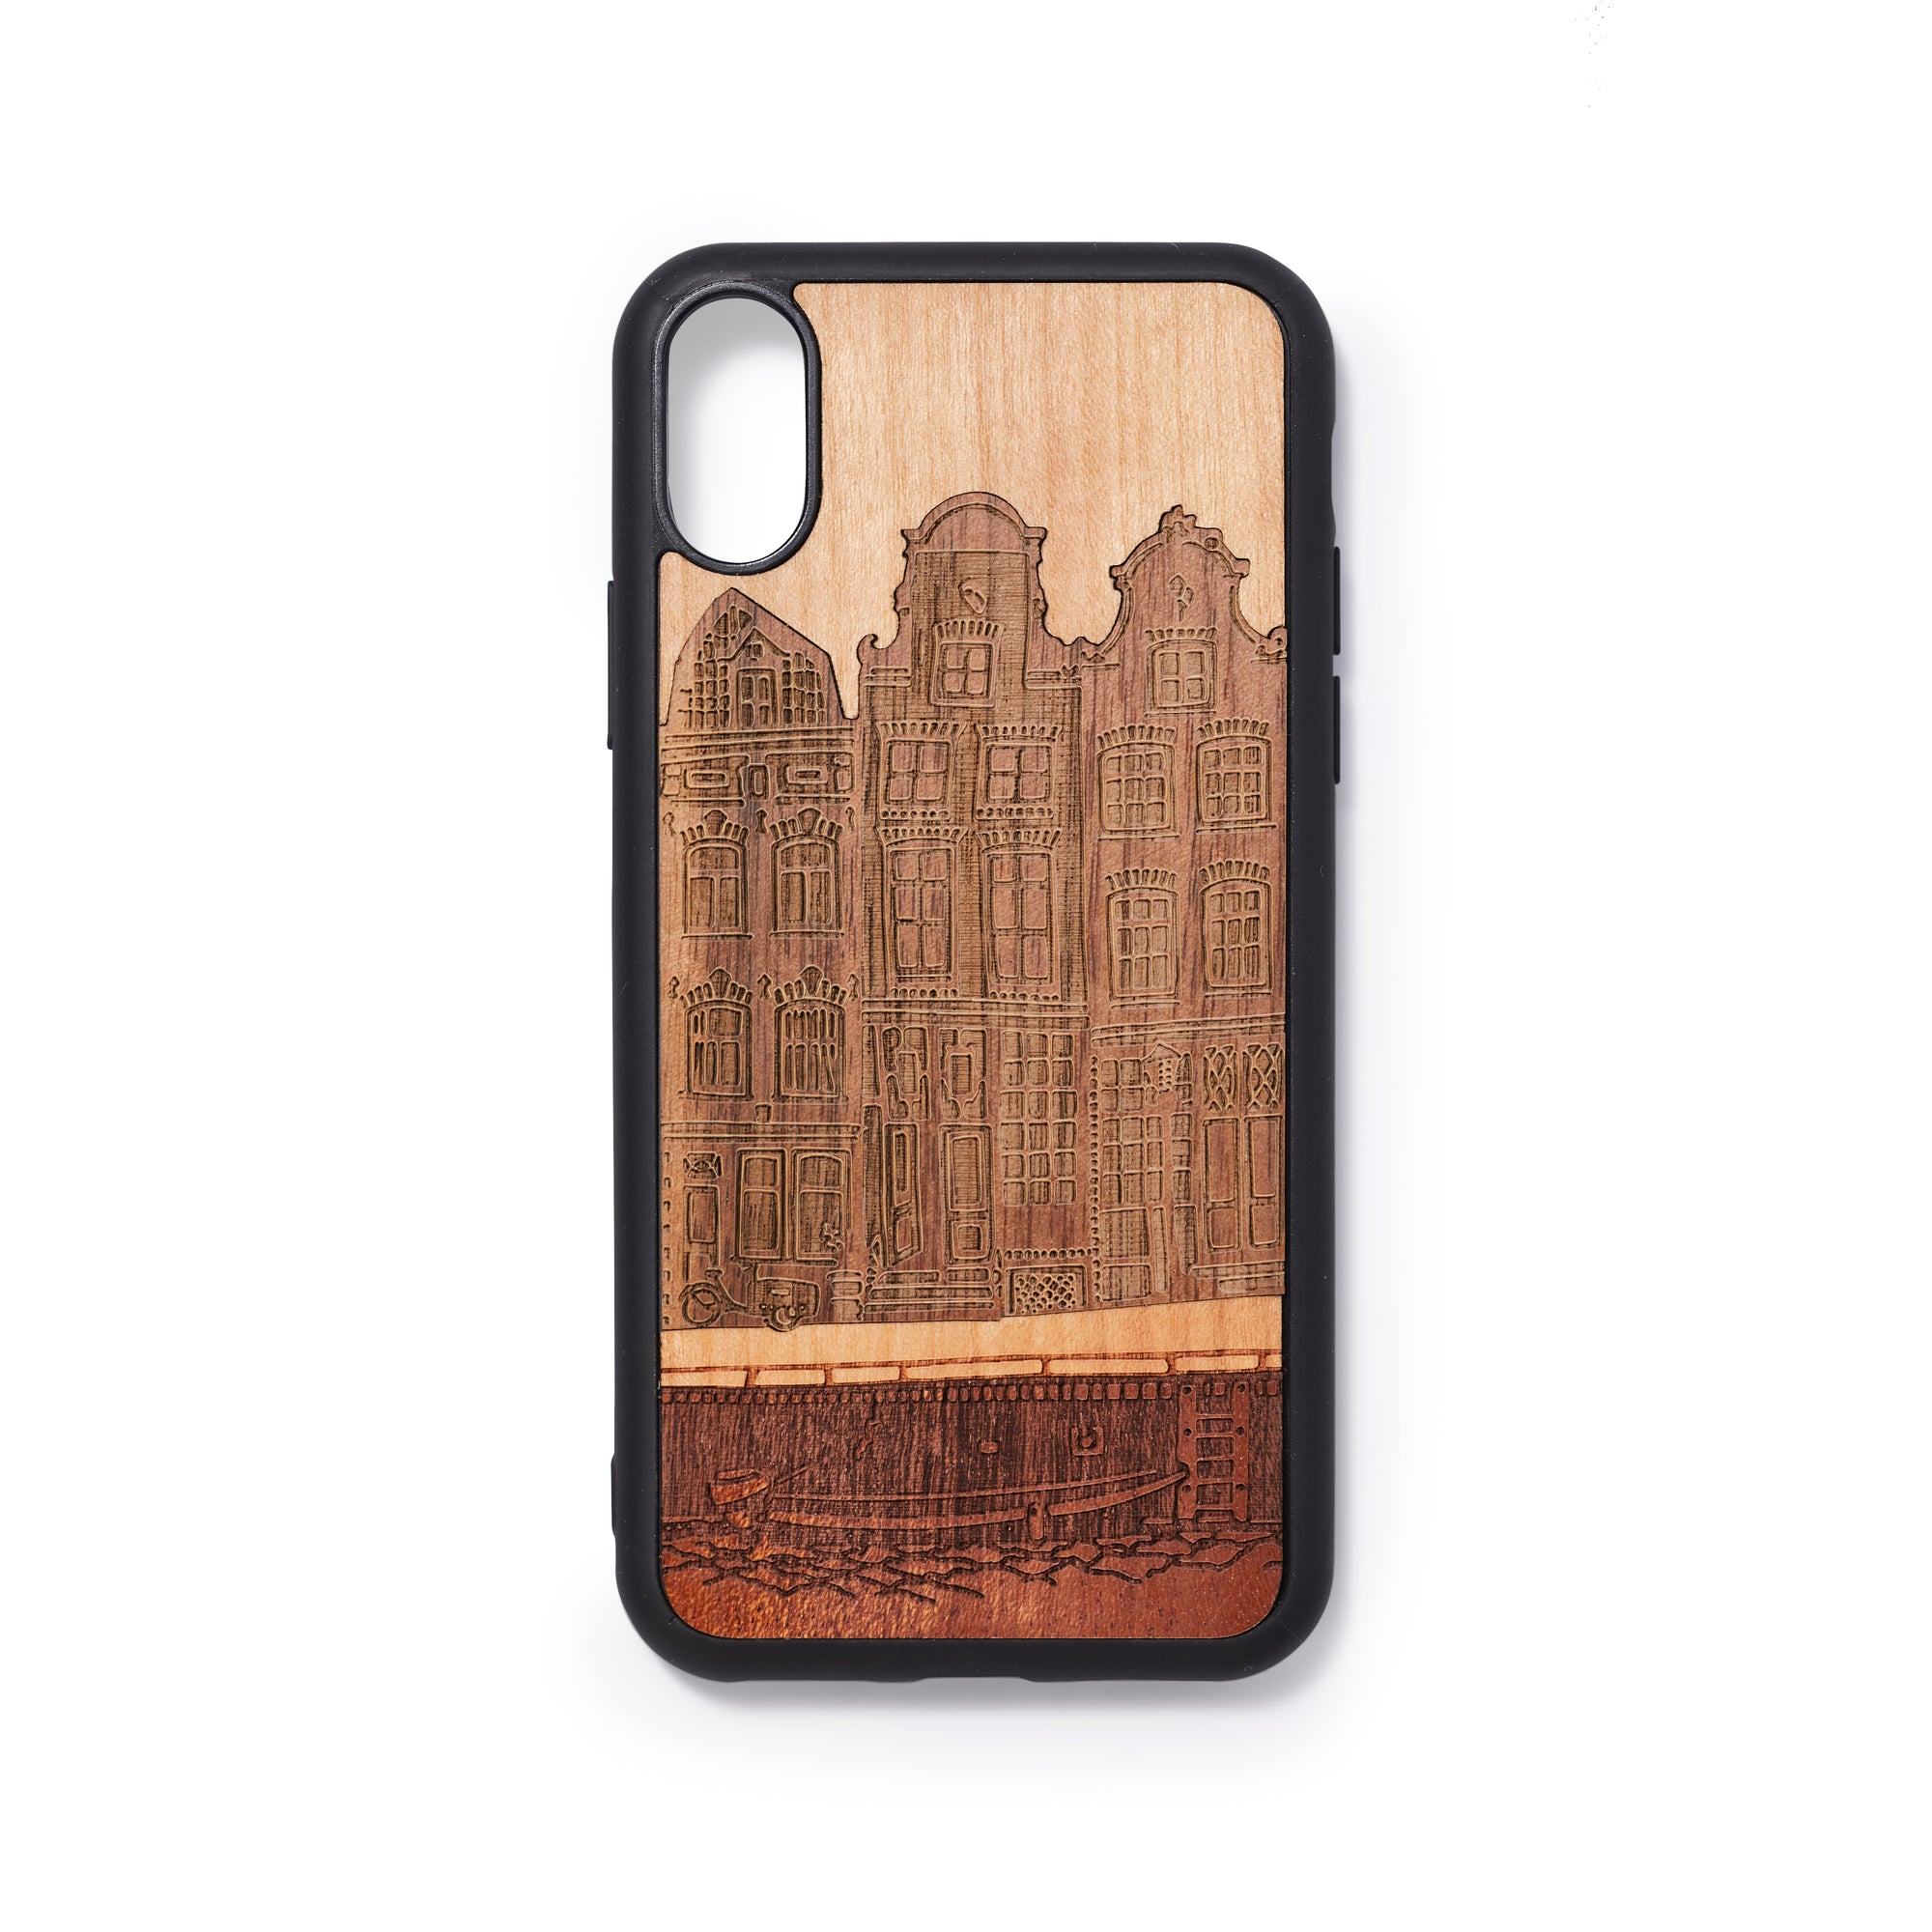 Wooden Iphone X back case house design - Woodstylz